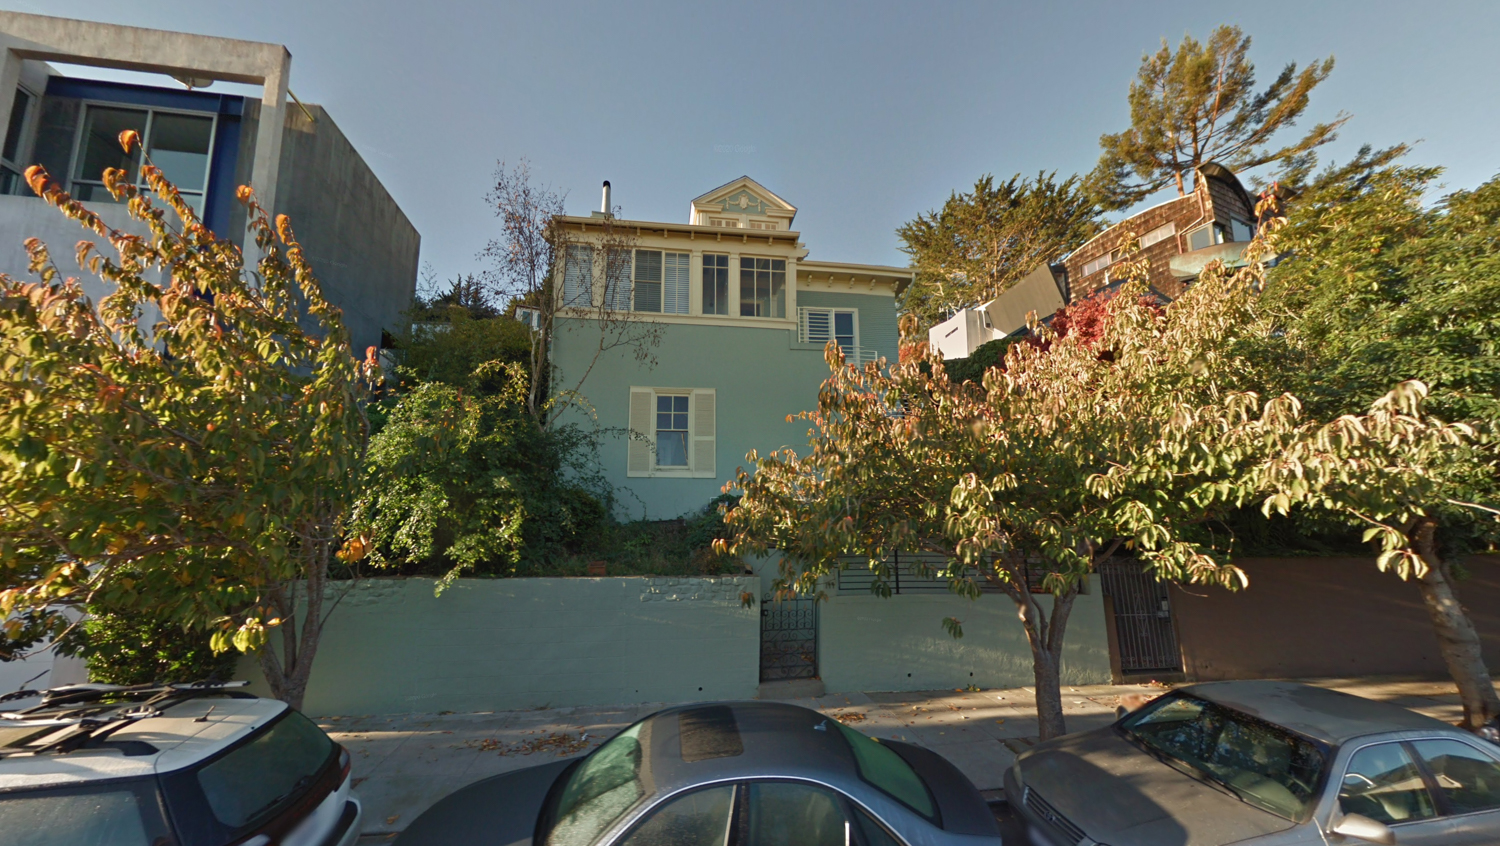 144 Laidley Street, image via Google Street View